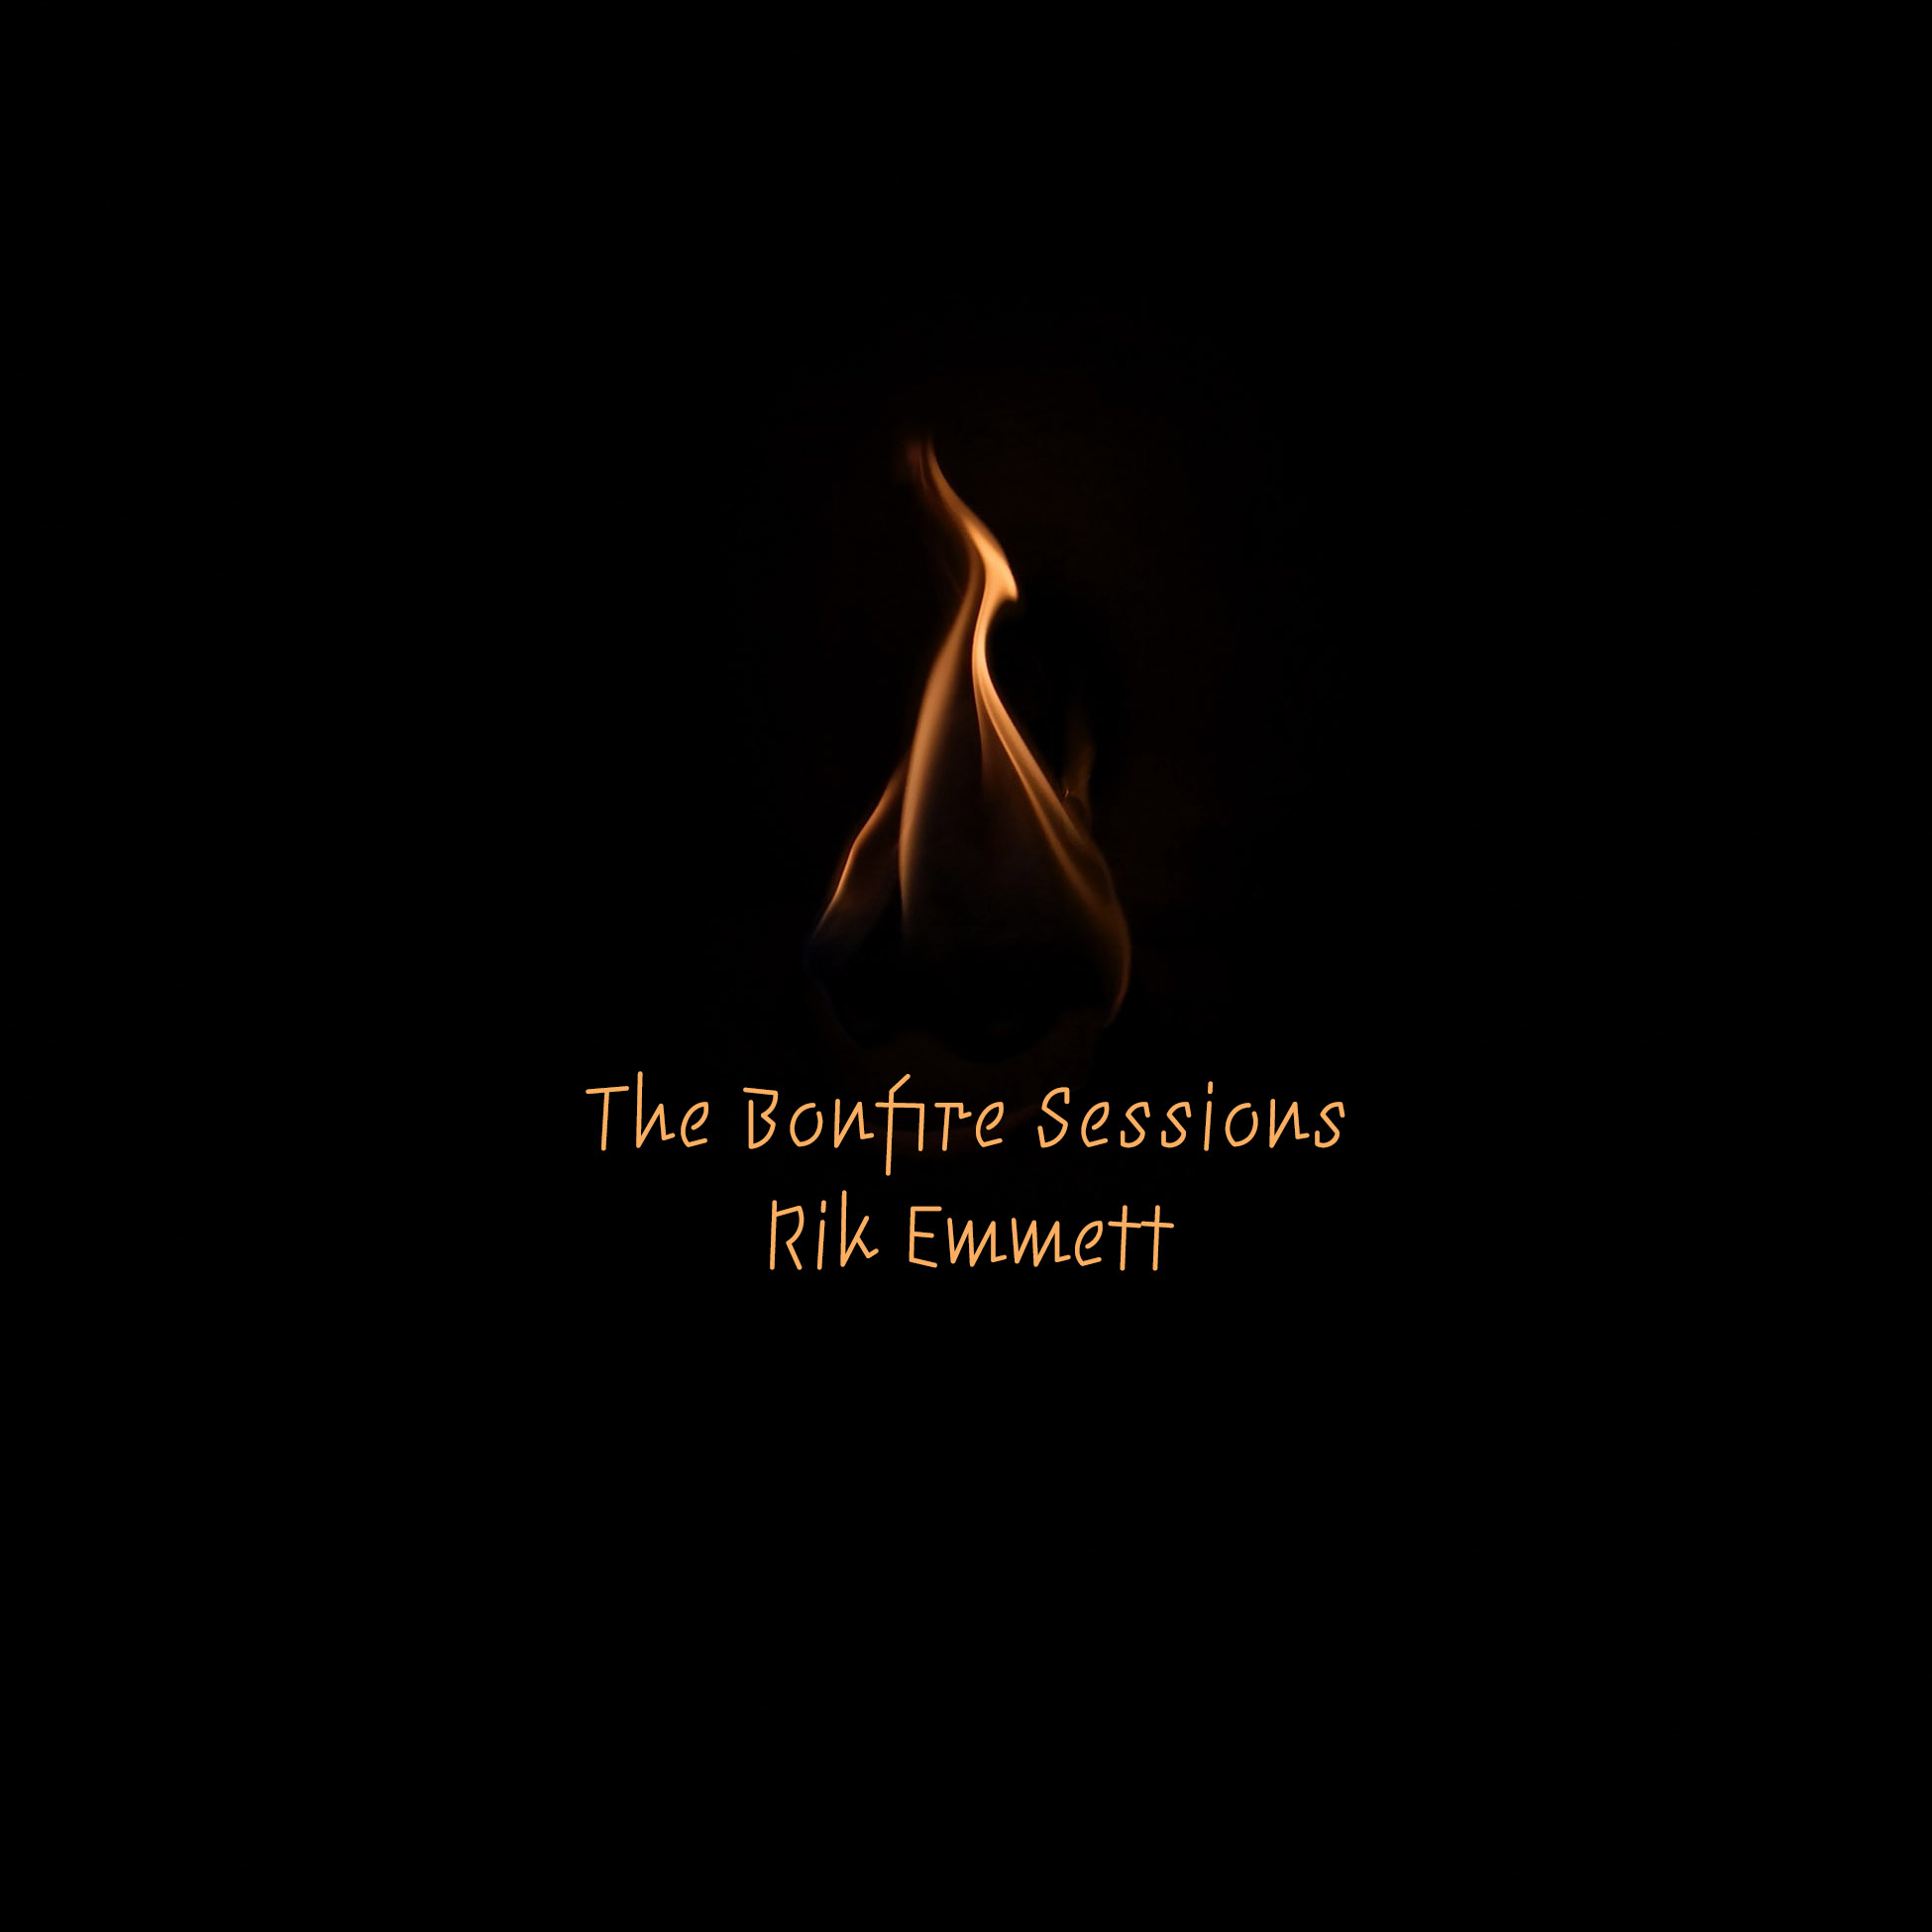 The Bonfire Sessions Album Art